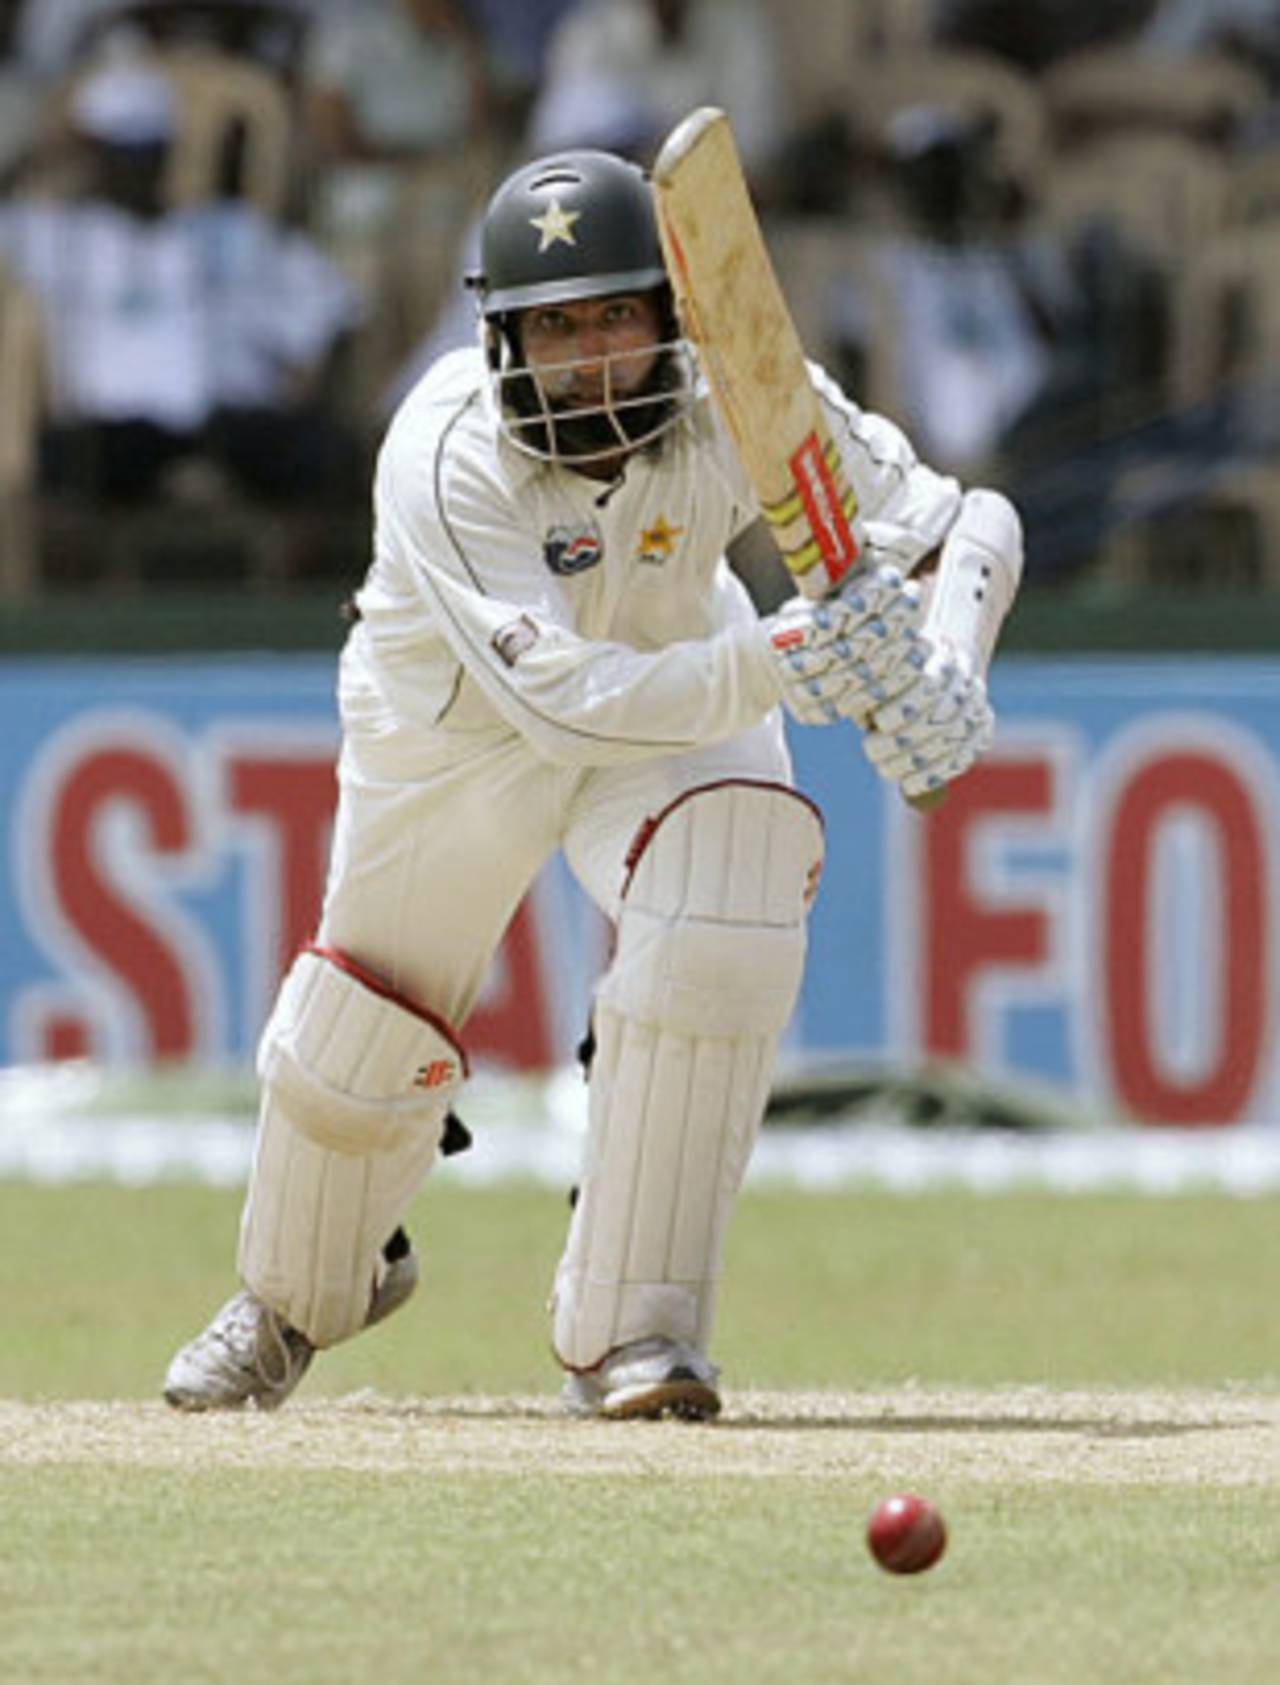 Mohammad Yousuf drives along the ground, Sri Lanka v Pakistan, 3rd Test, 1st day, Colombo, July 20, 2009 